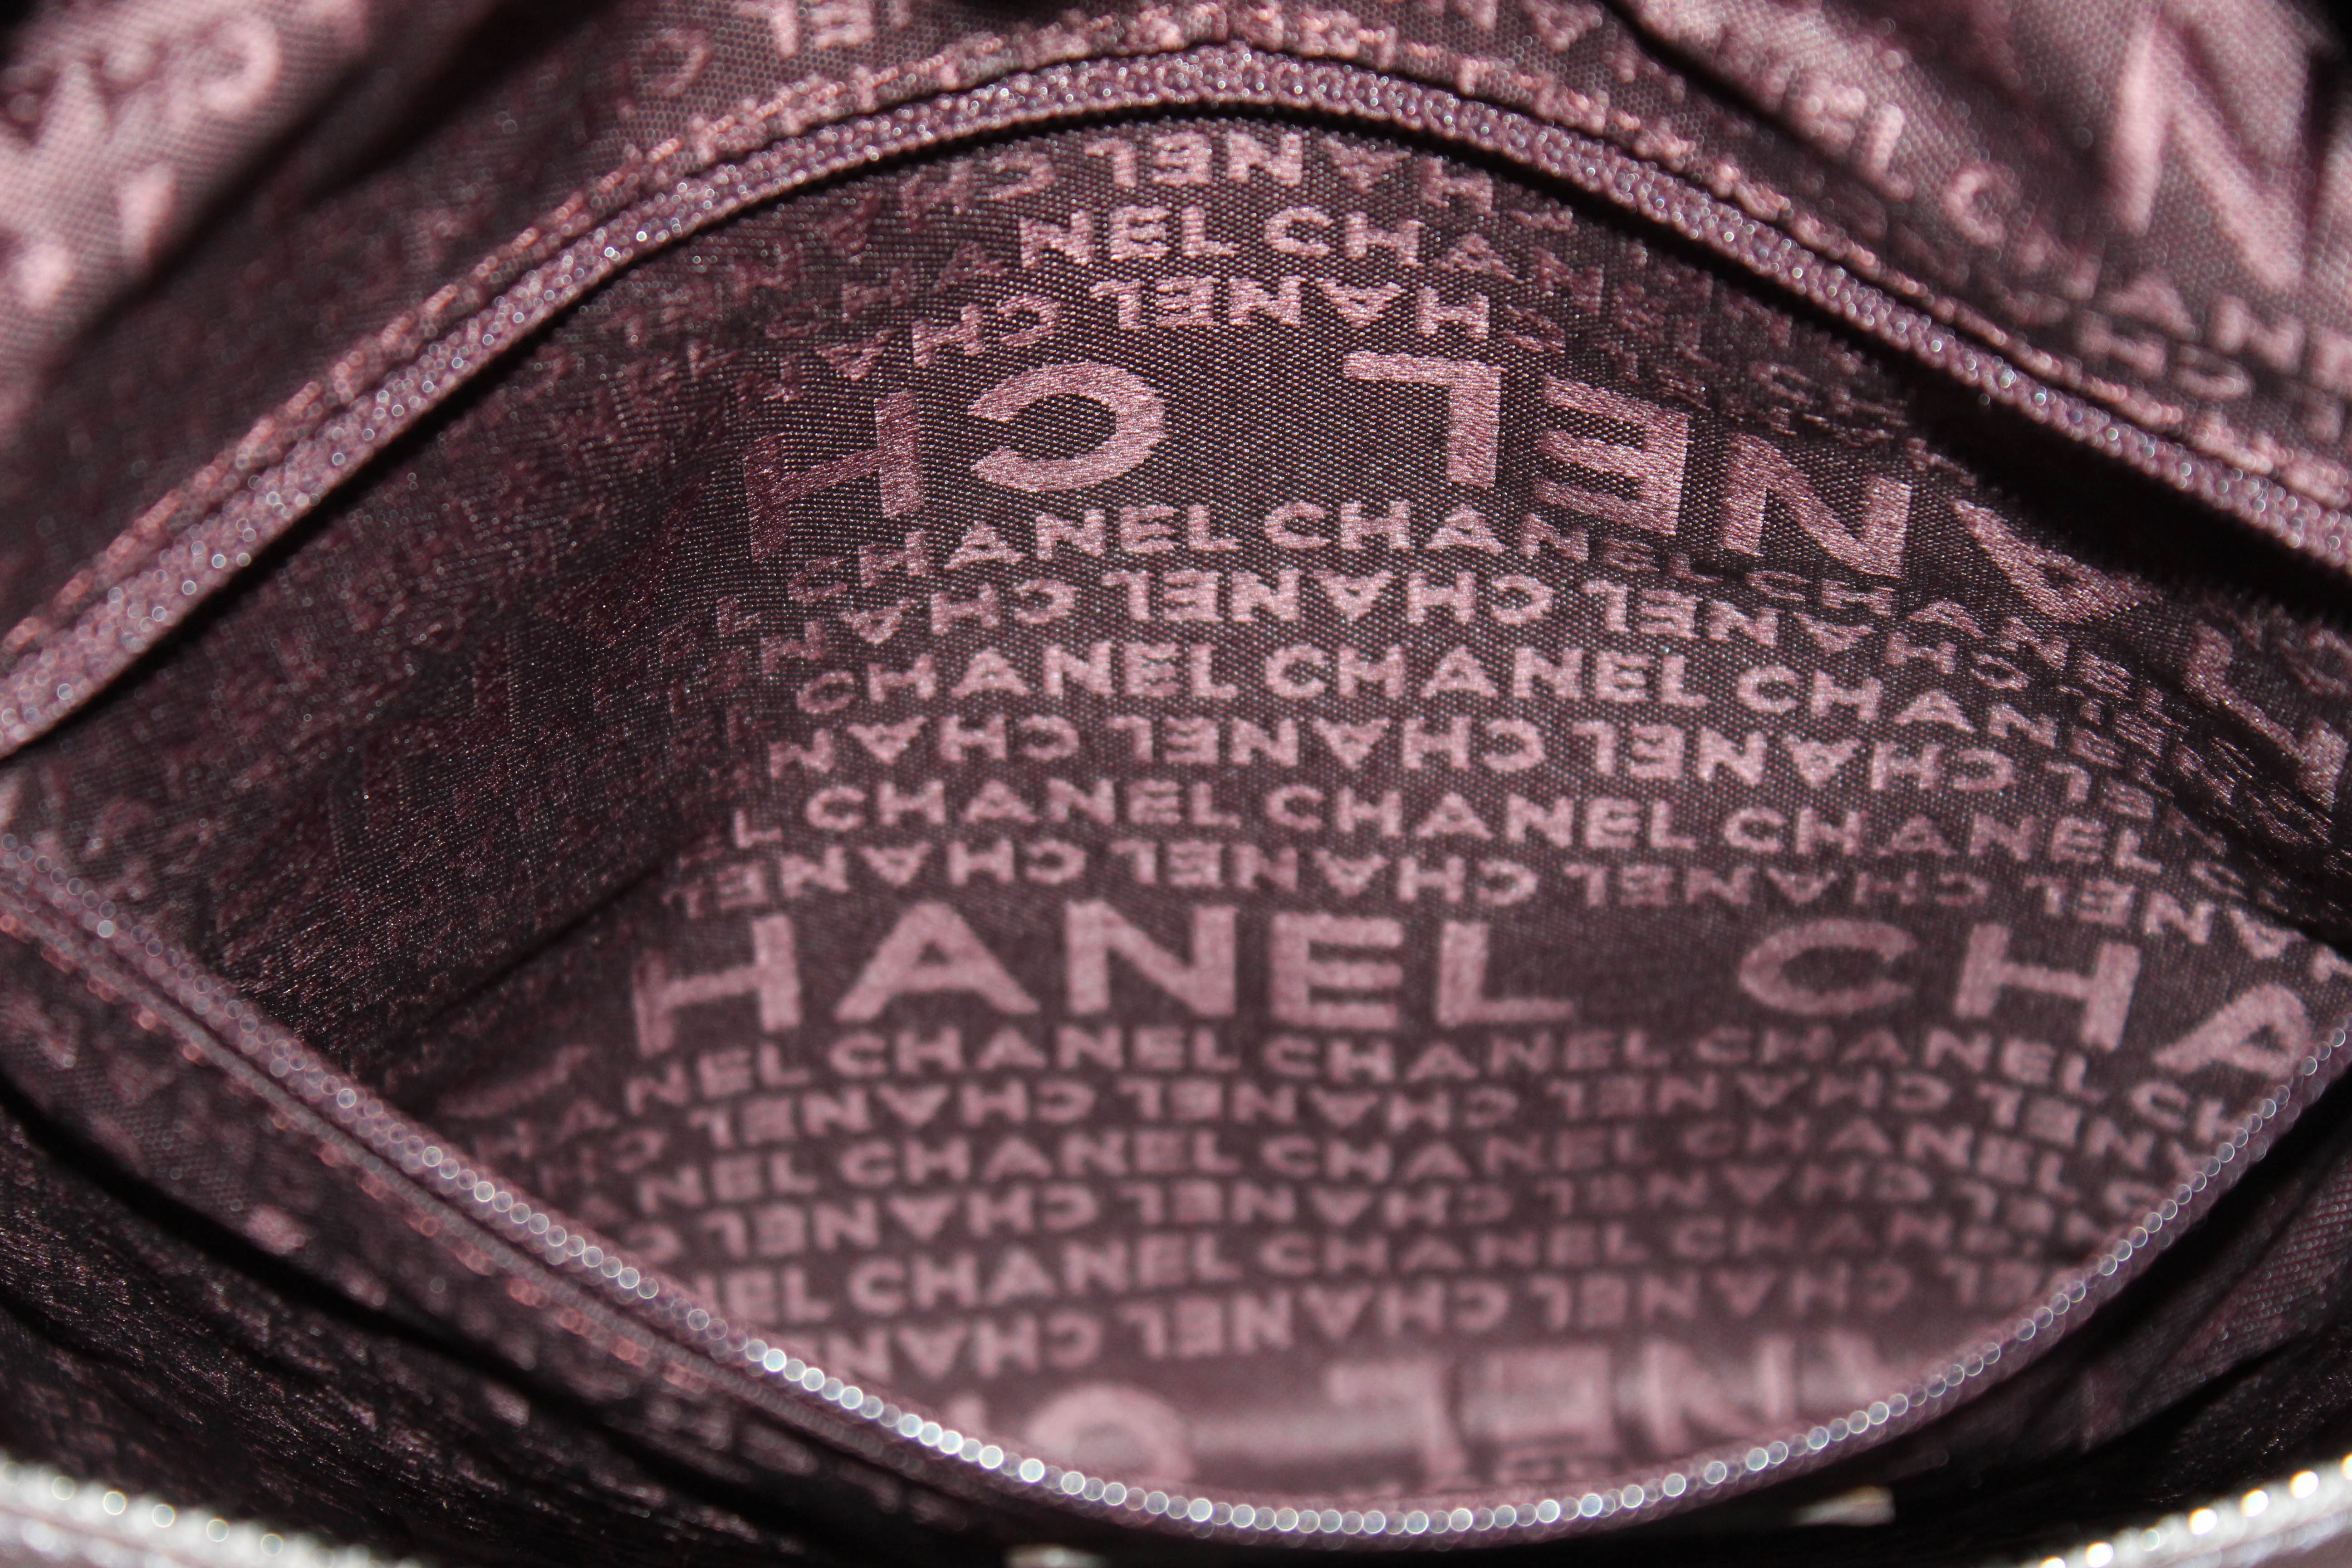 Authentic New Chanel Purple Caviar Leather Large Square Stitch Handbag